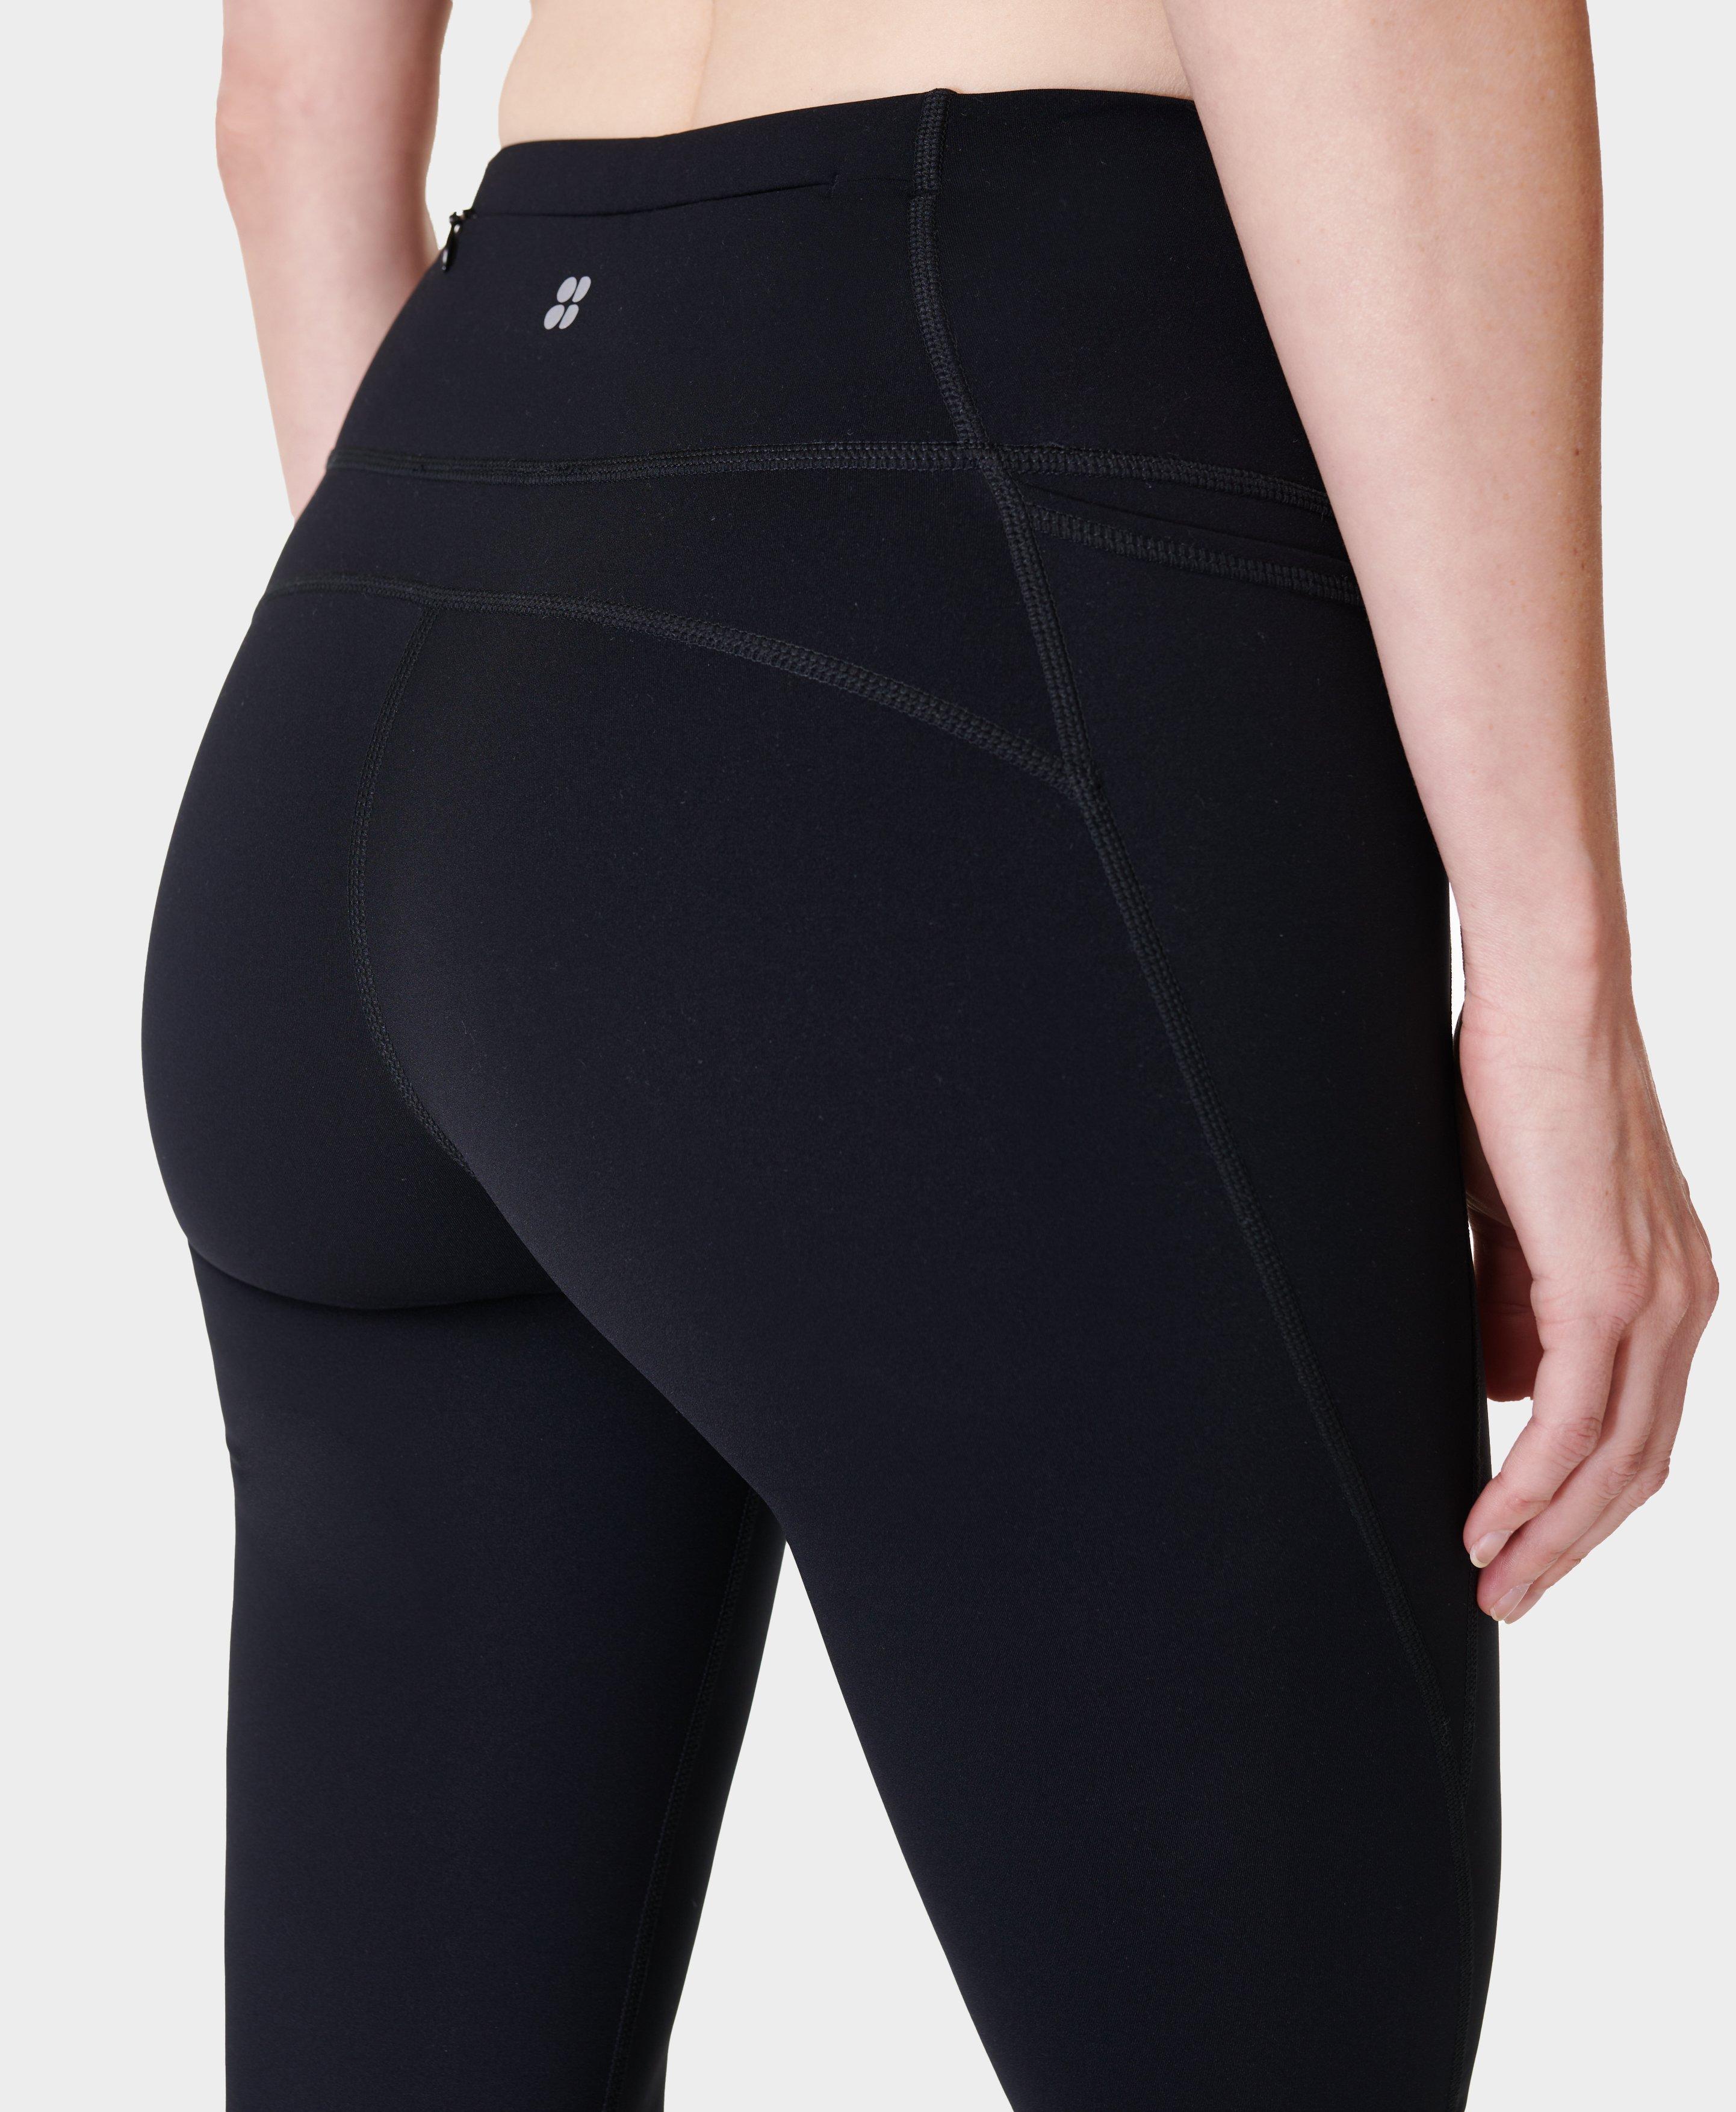 Plus Size Women'S Yoga Pants With Back Pocket